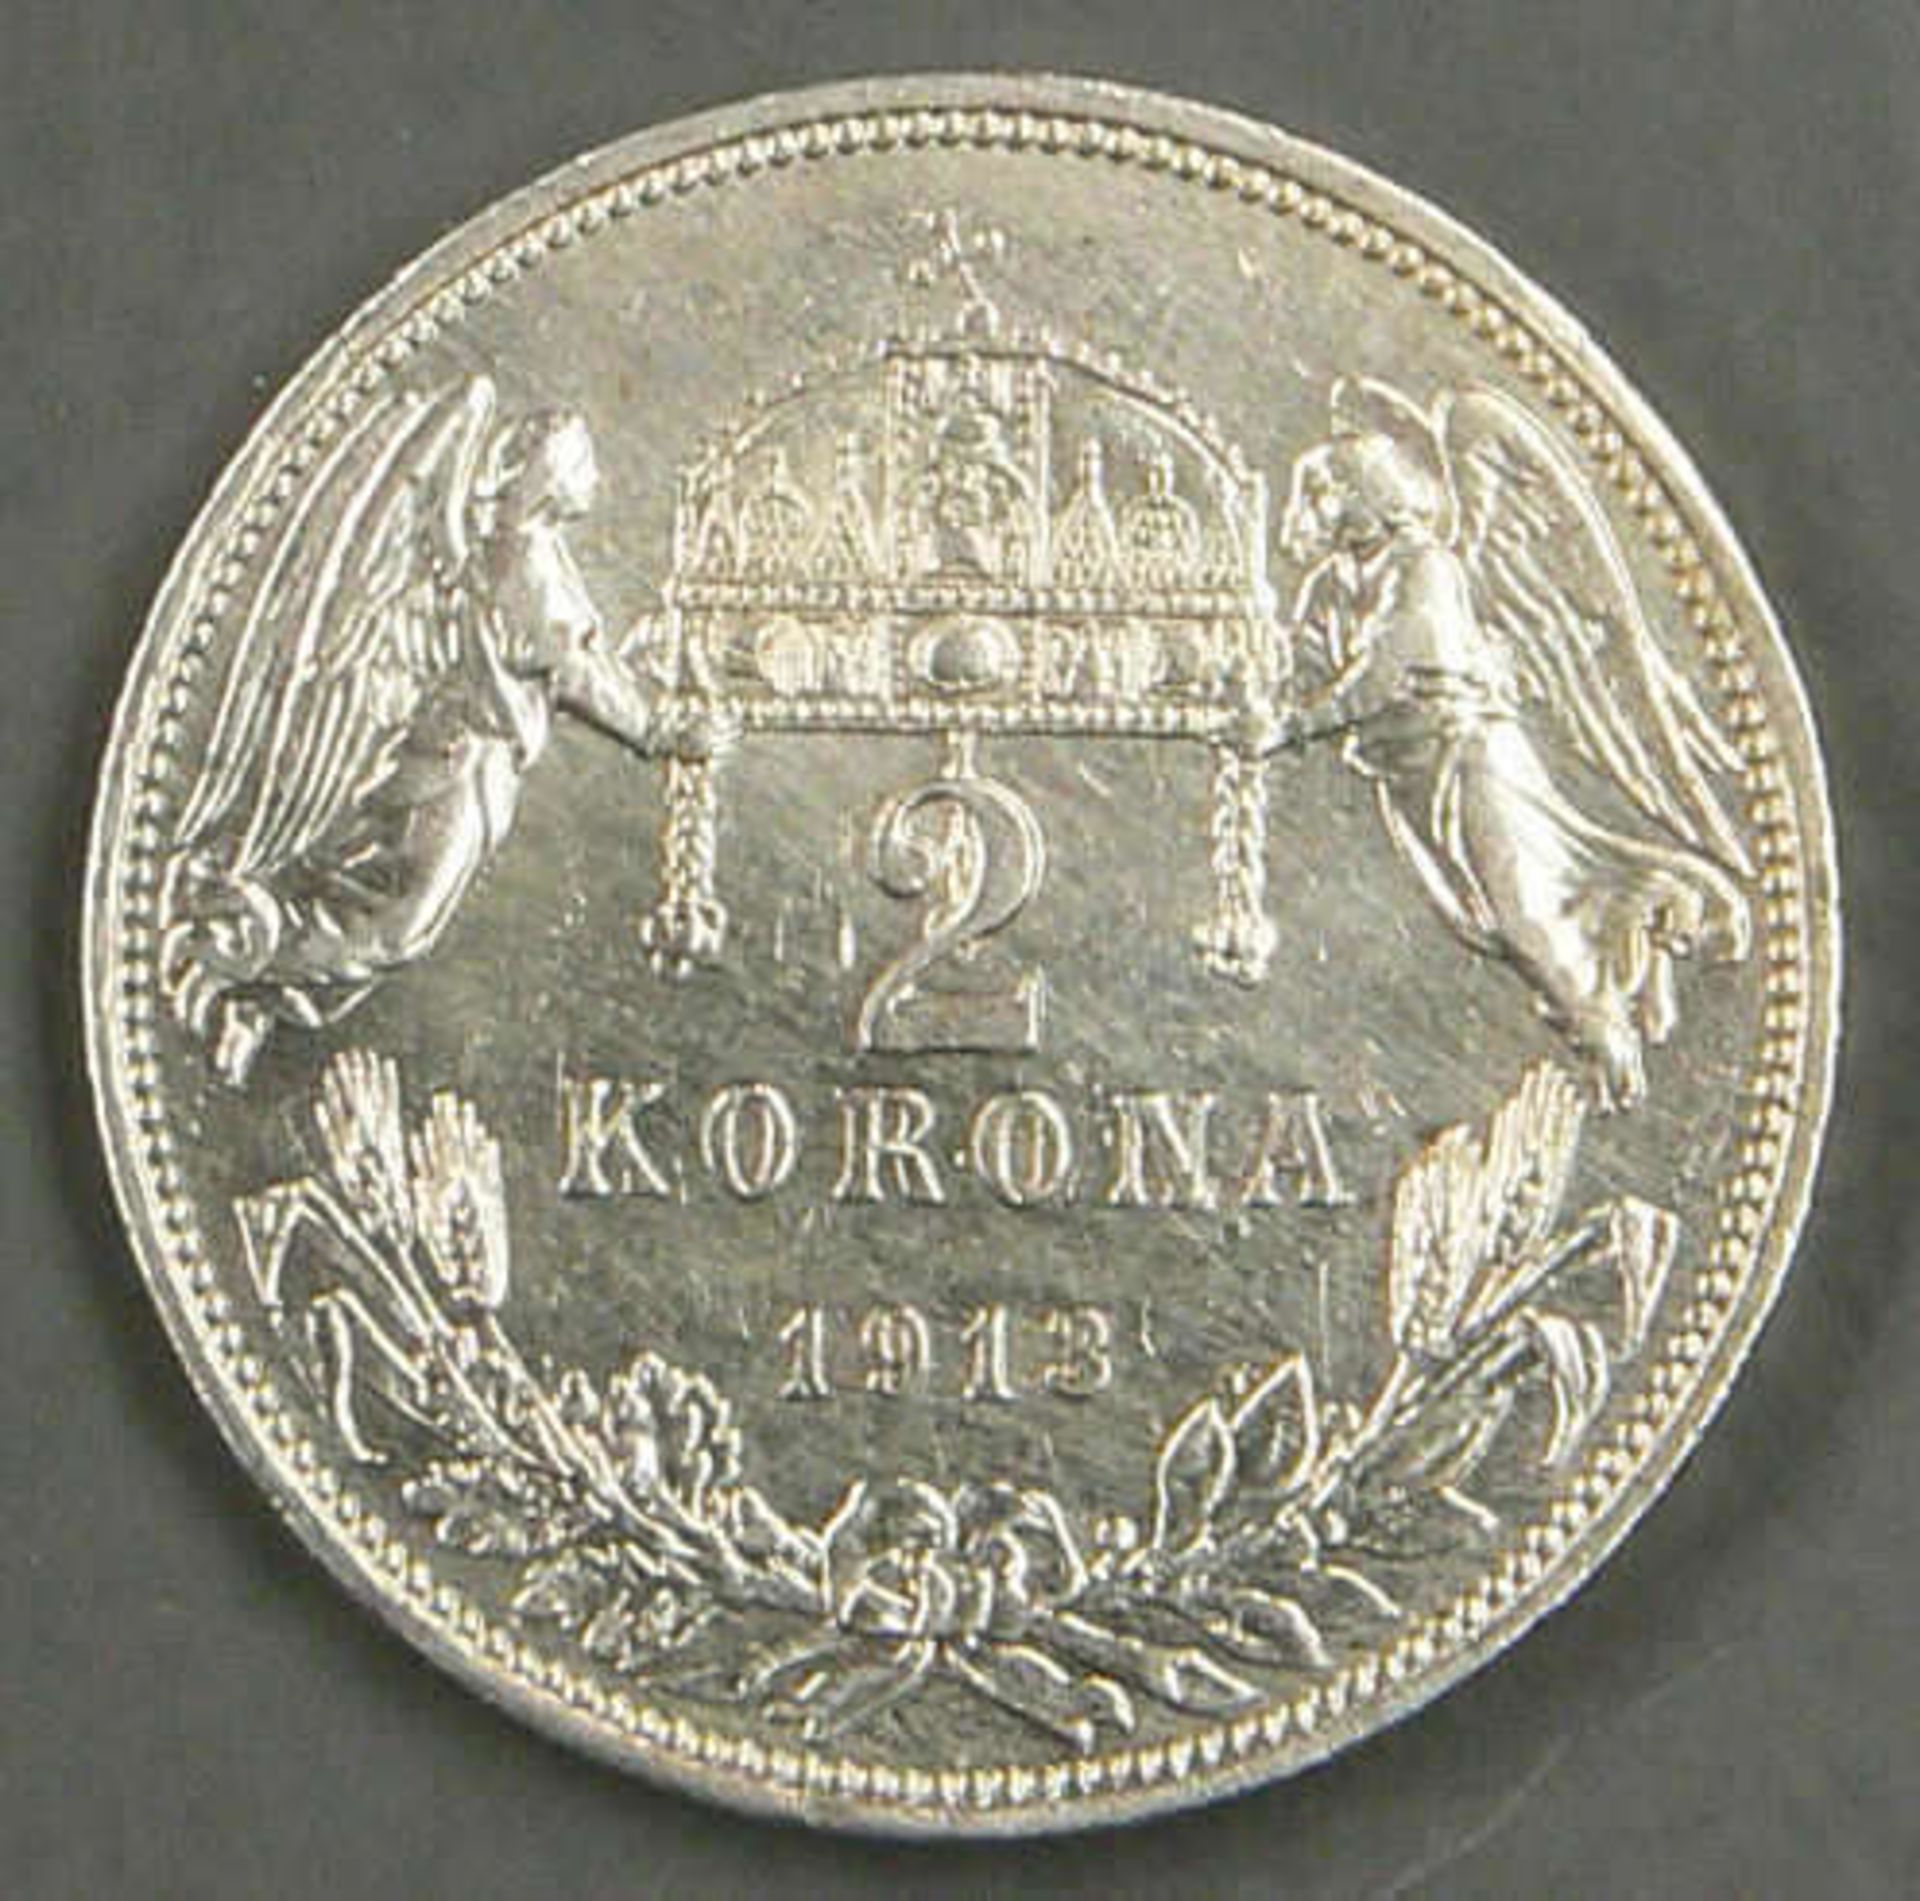 Österreich 1913, 2 Korona, unzirkuliert. Austria 1913, 2 corona, uncirculated.